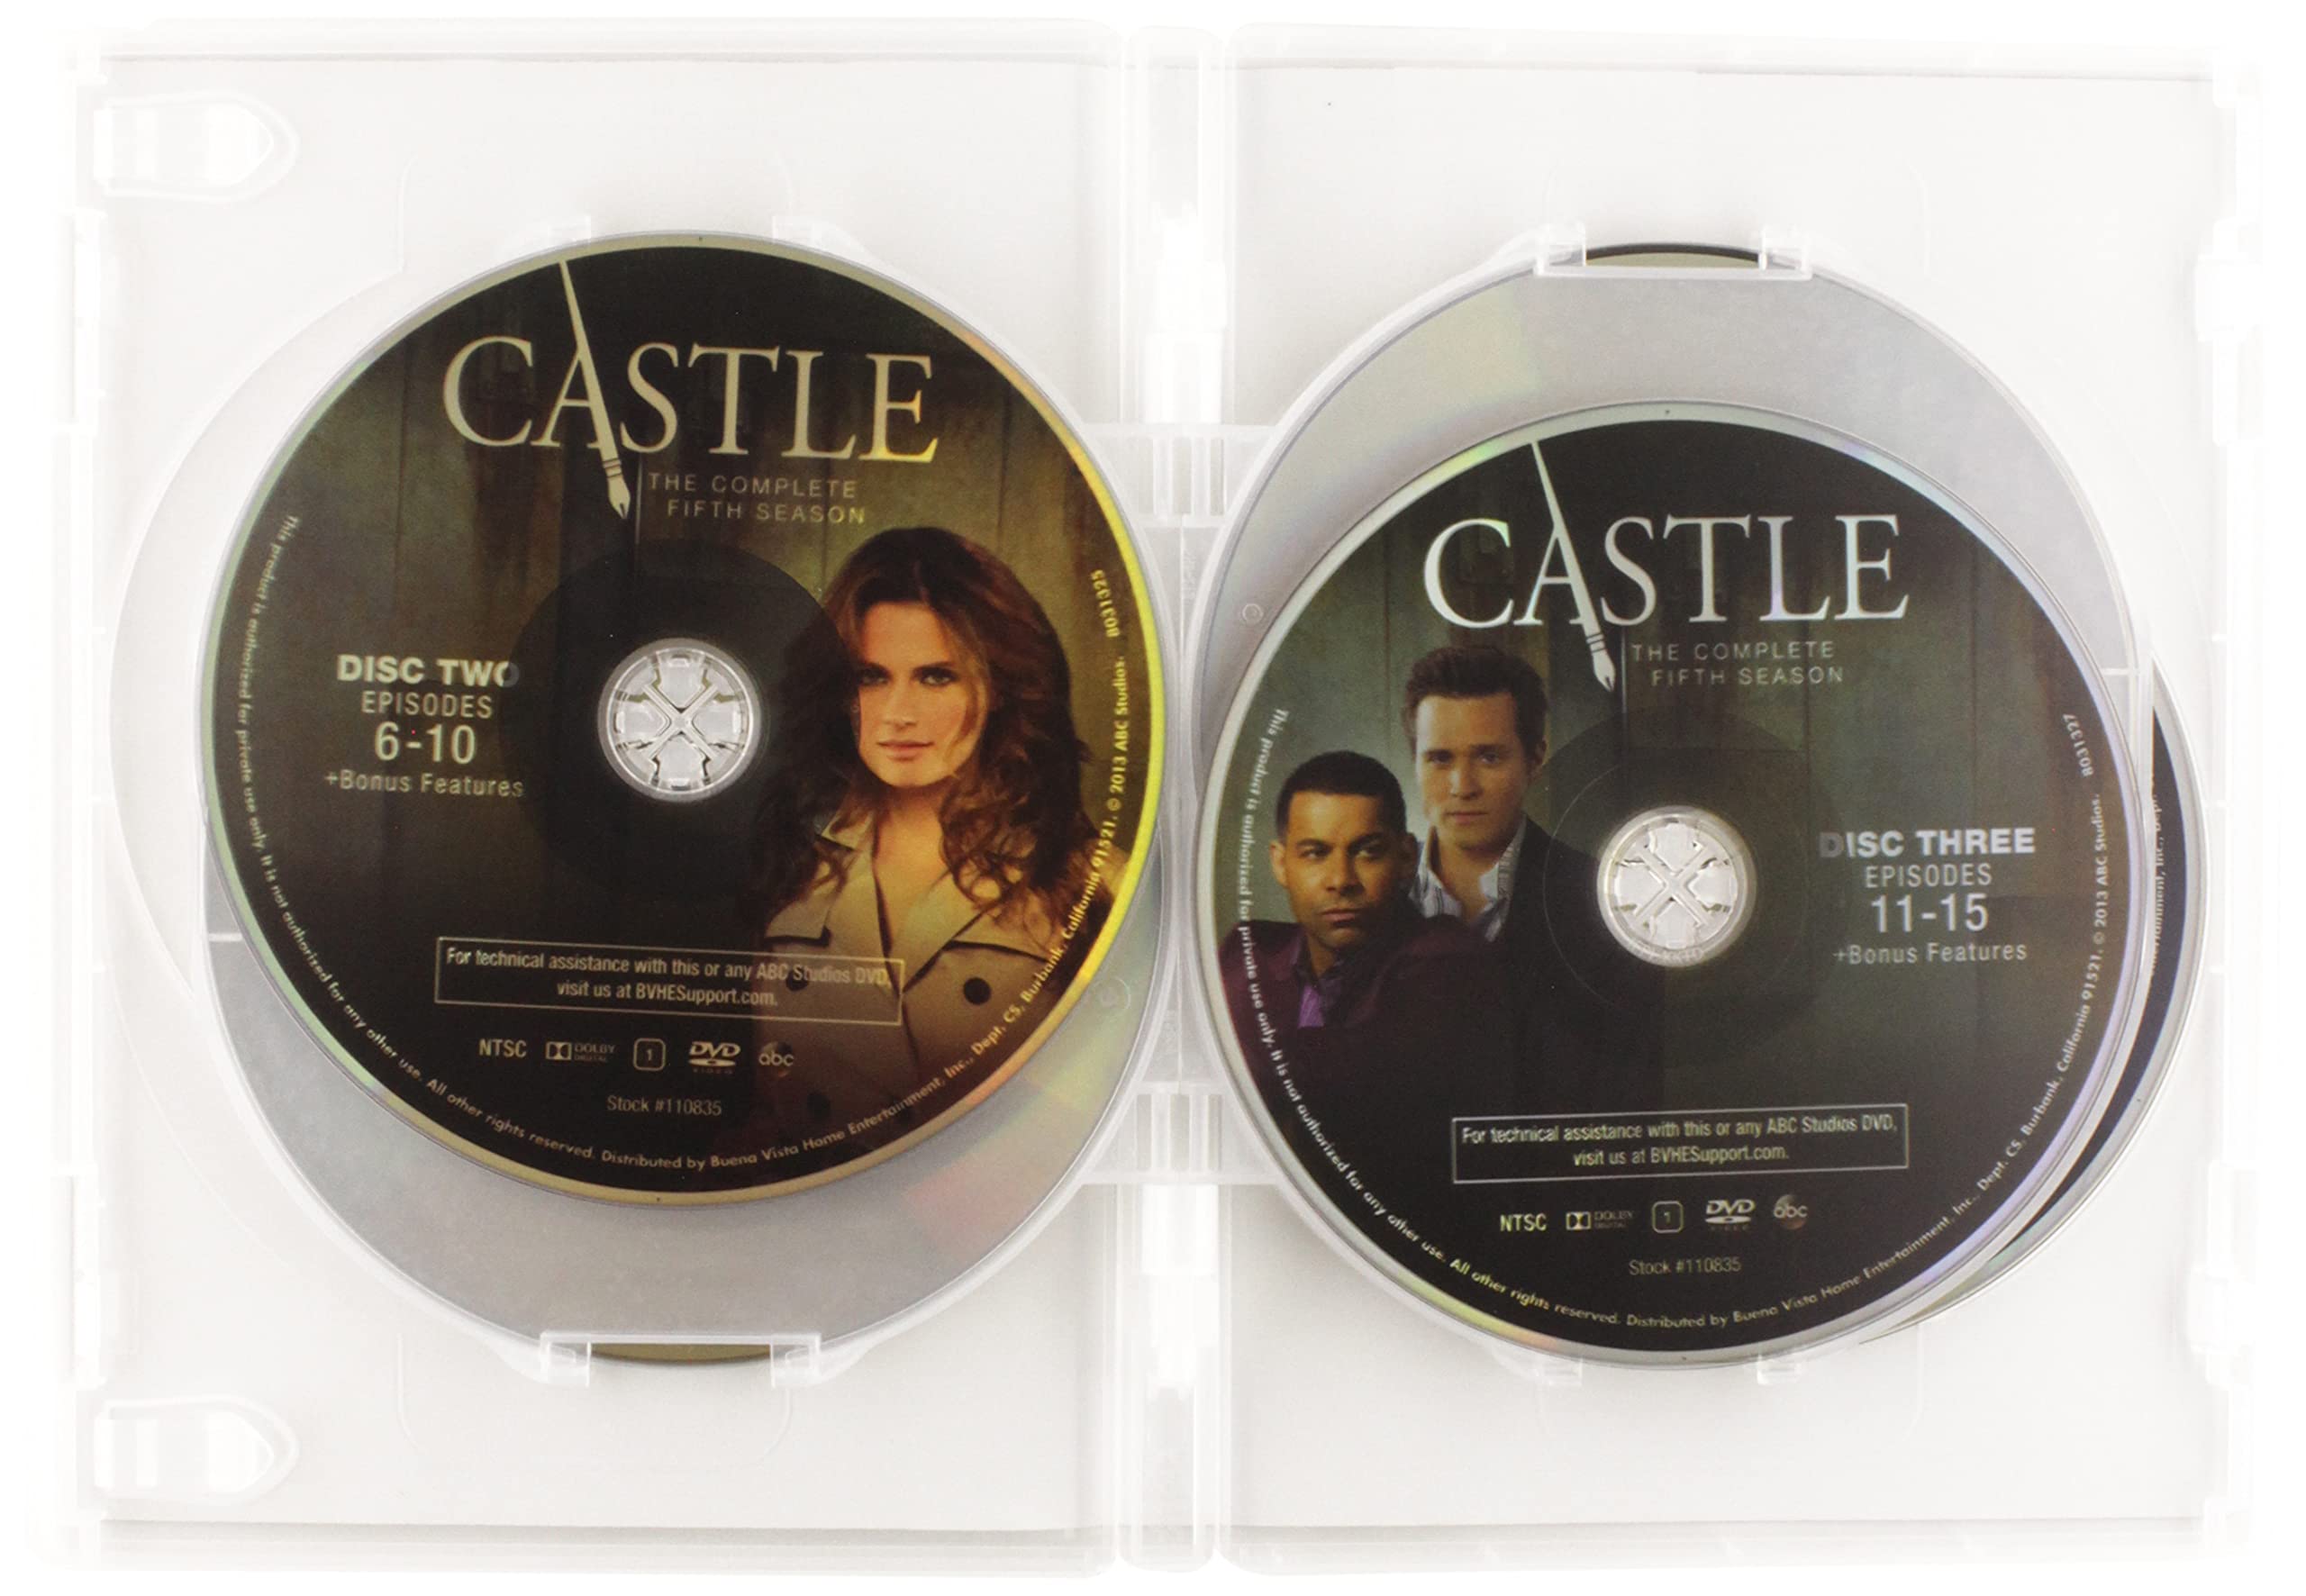 Castle: The Complete Fifth Season (DVD), ABC Studios, Drama - image 3 of 3